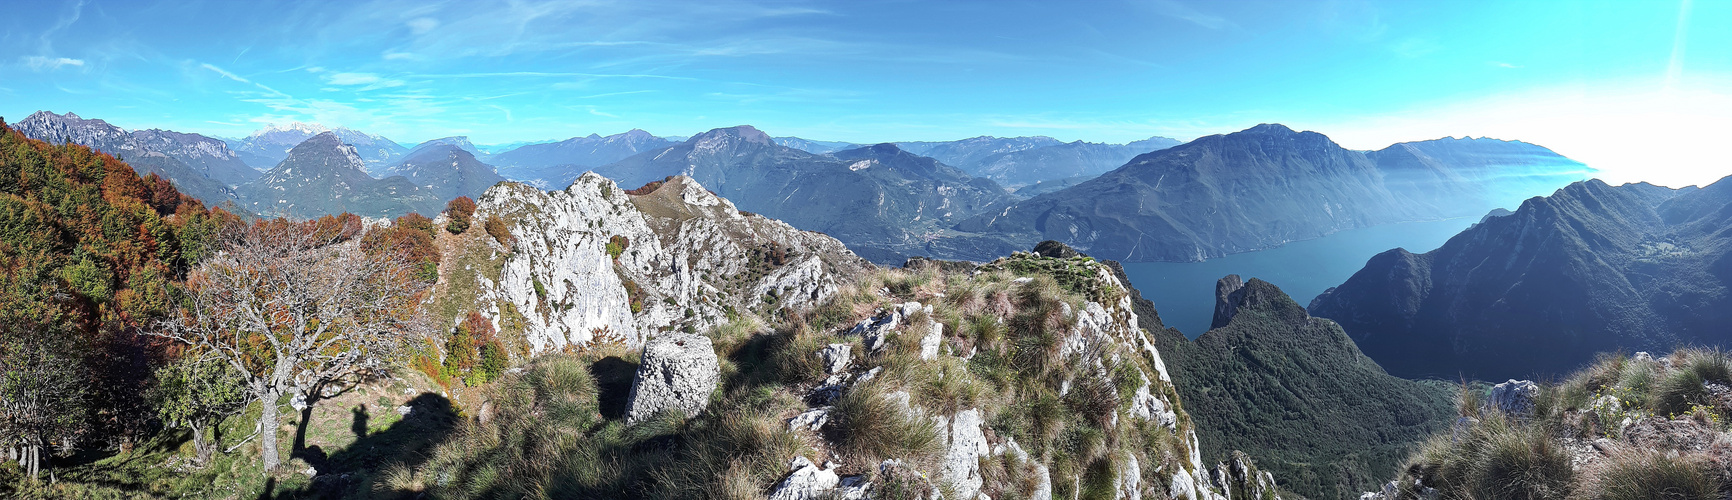 Panorama vom Gipfel des Rocchetta-Massivs oberhalb von Riva del Garda